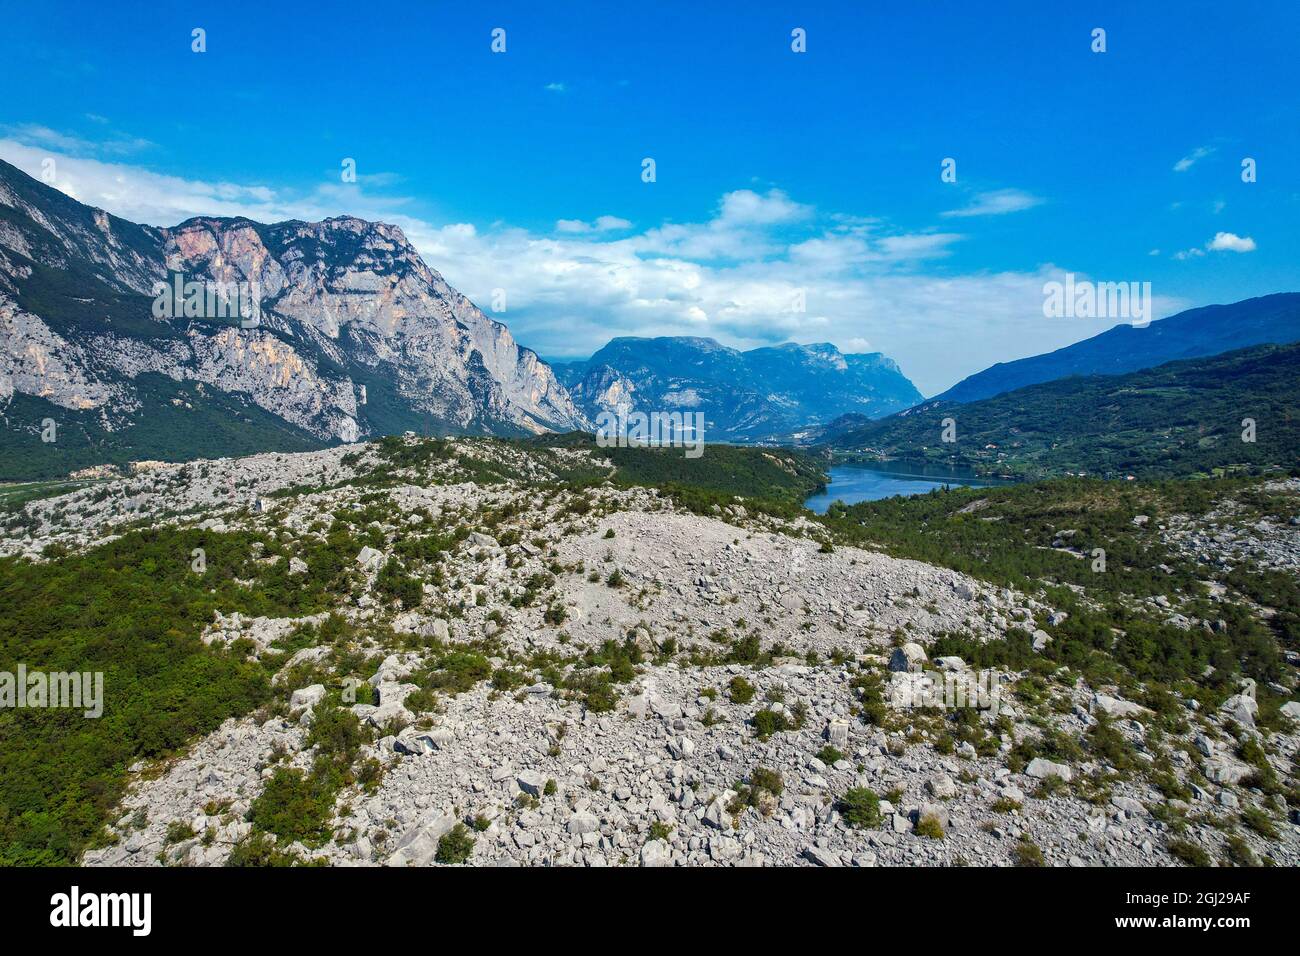 Mavic Air 2S drone ariel photographies de la chute de Marocche di Dro, Trento, Italian Lakes, Italie Banque D'Images